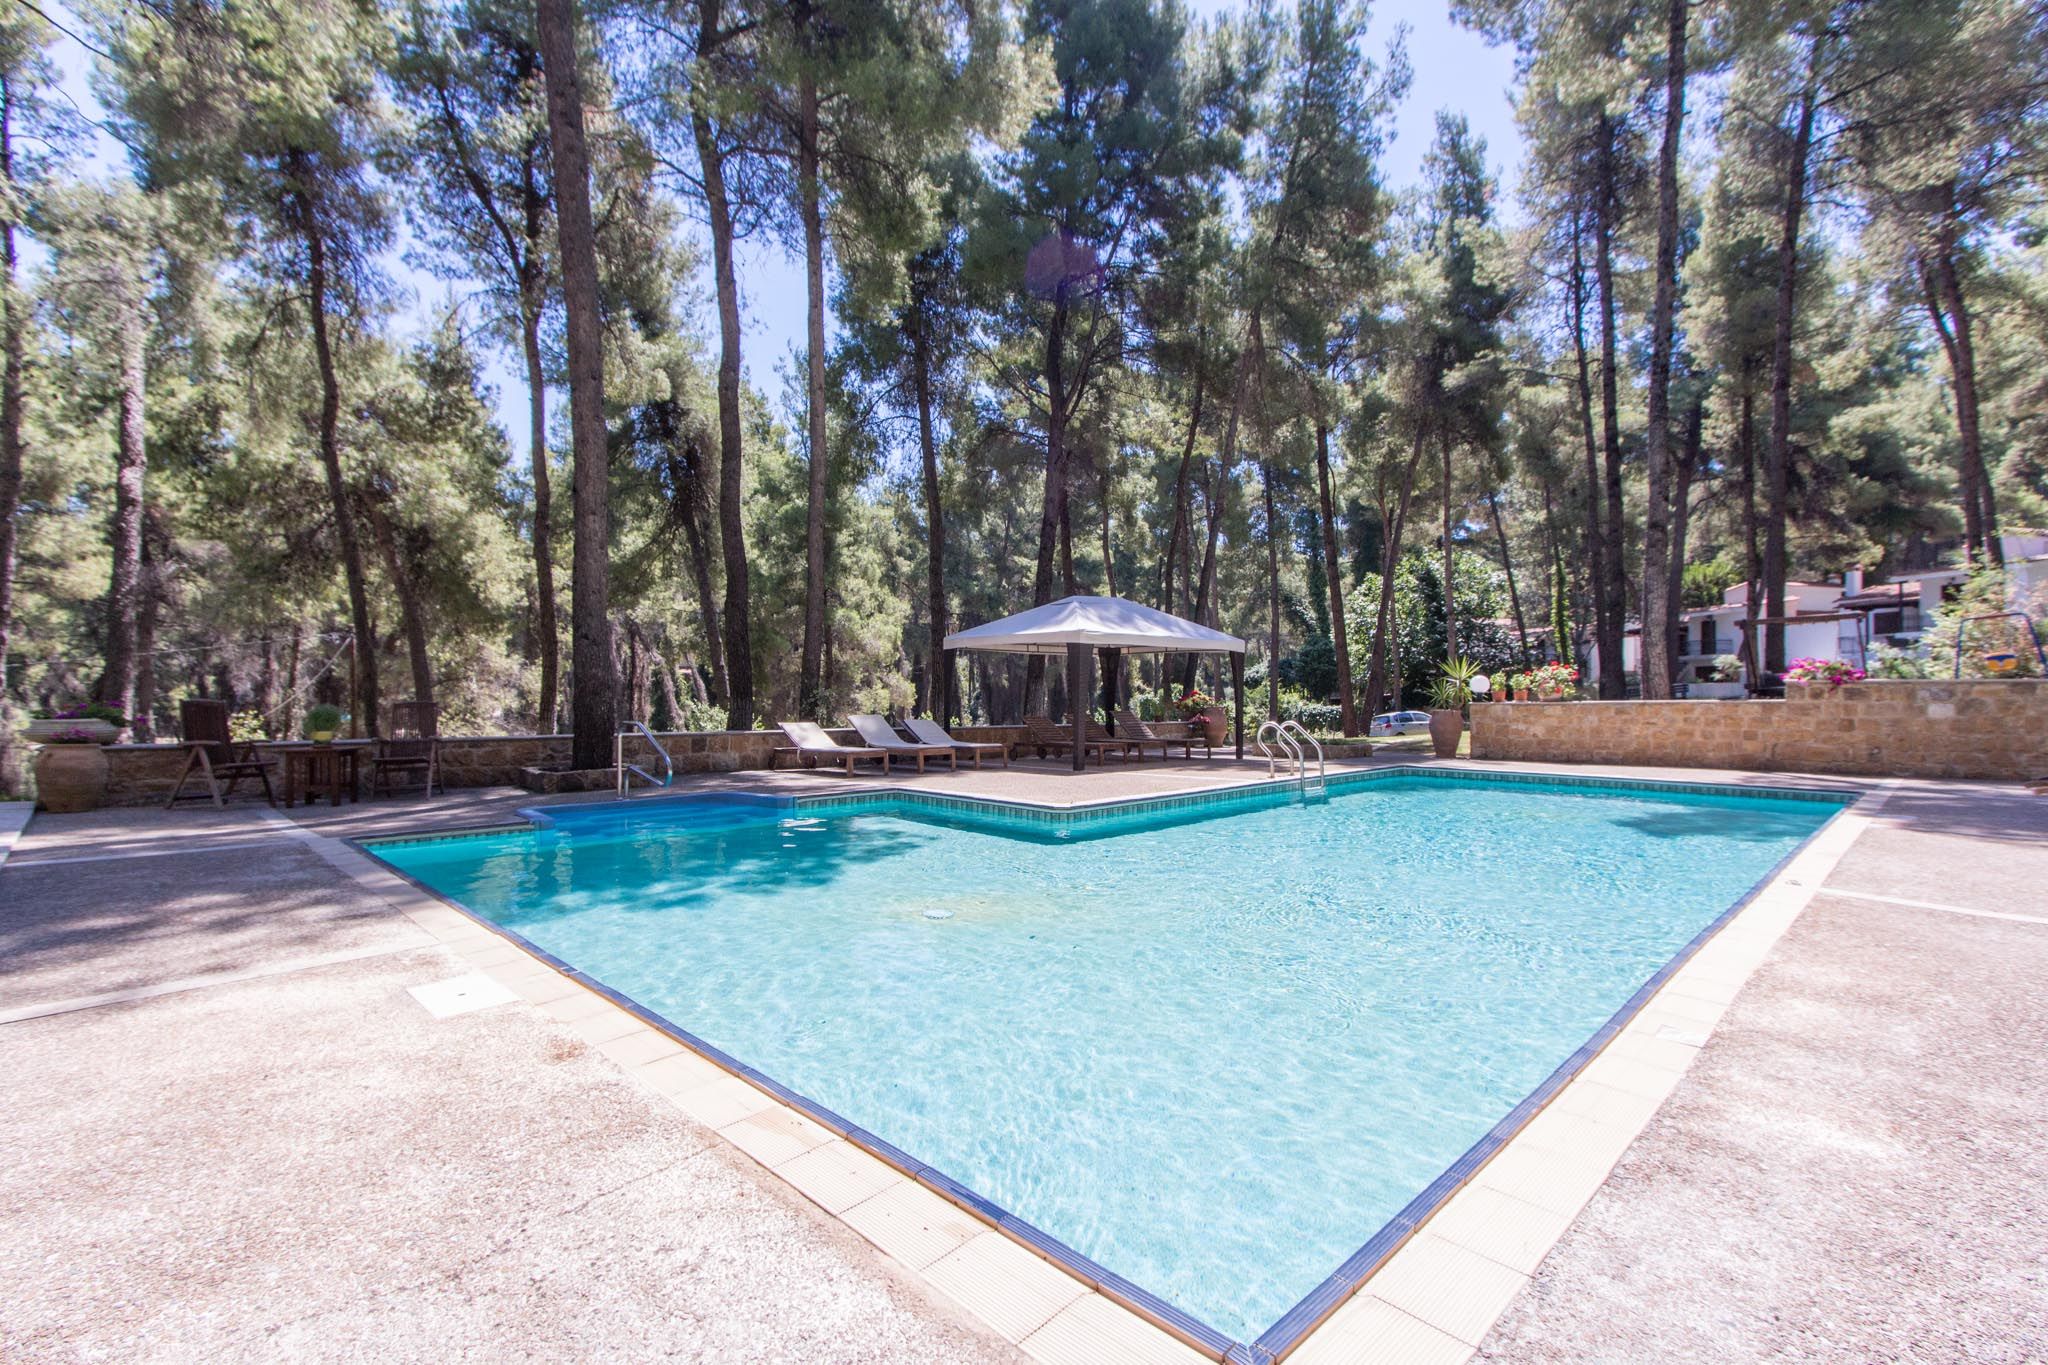 Sani Cape Villas Shared Pool